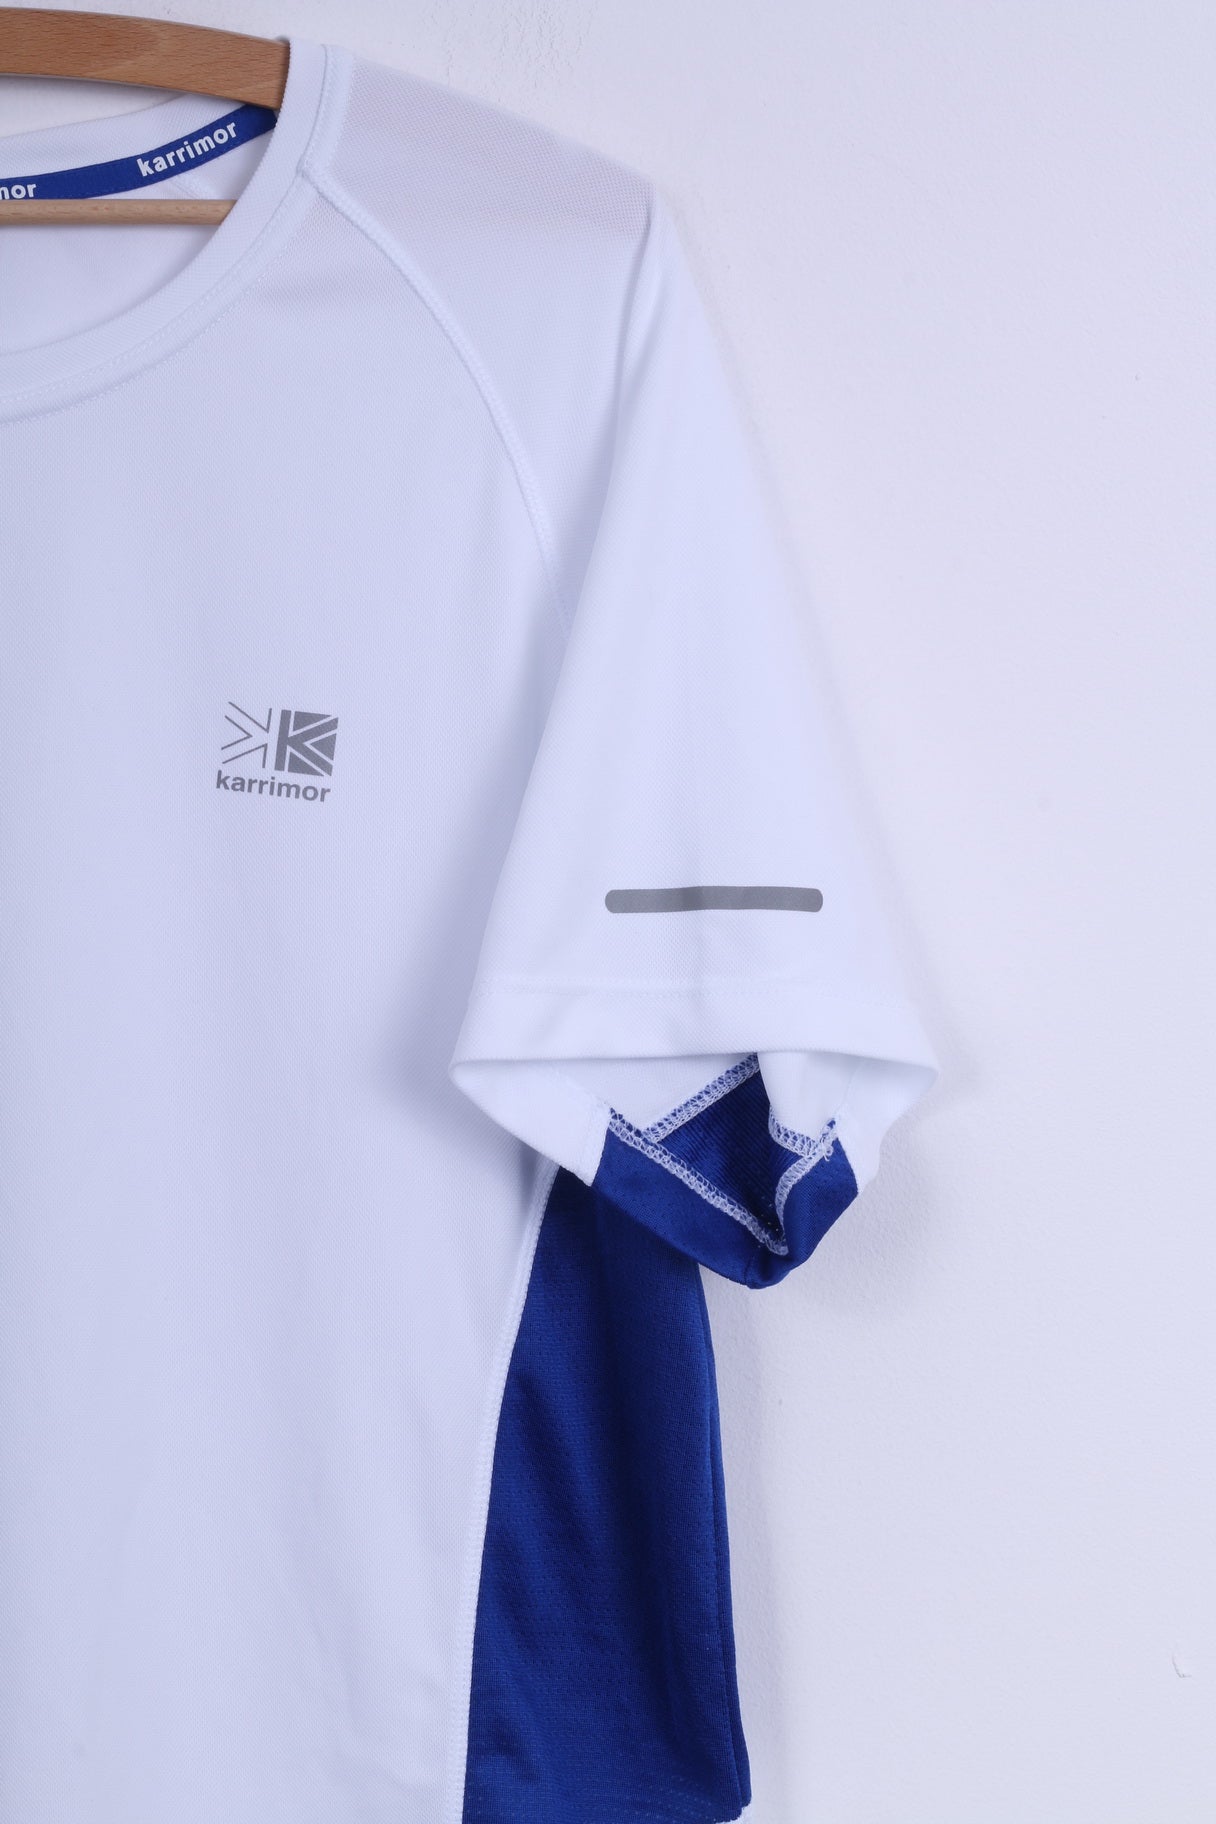 Karrimor T-Shirt XXL Homme Running Blanc Sport Respirant